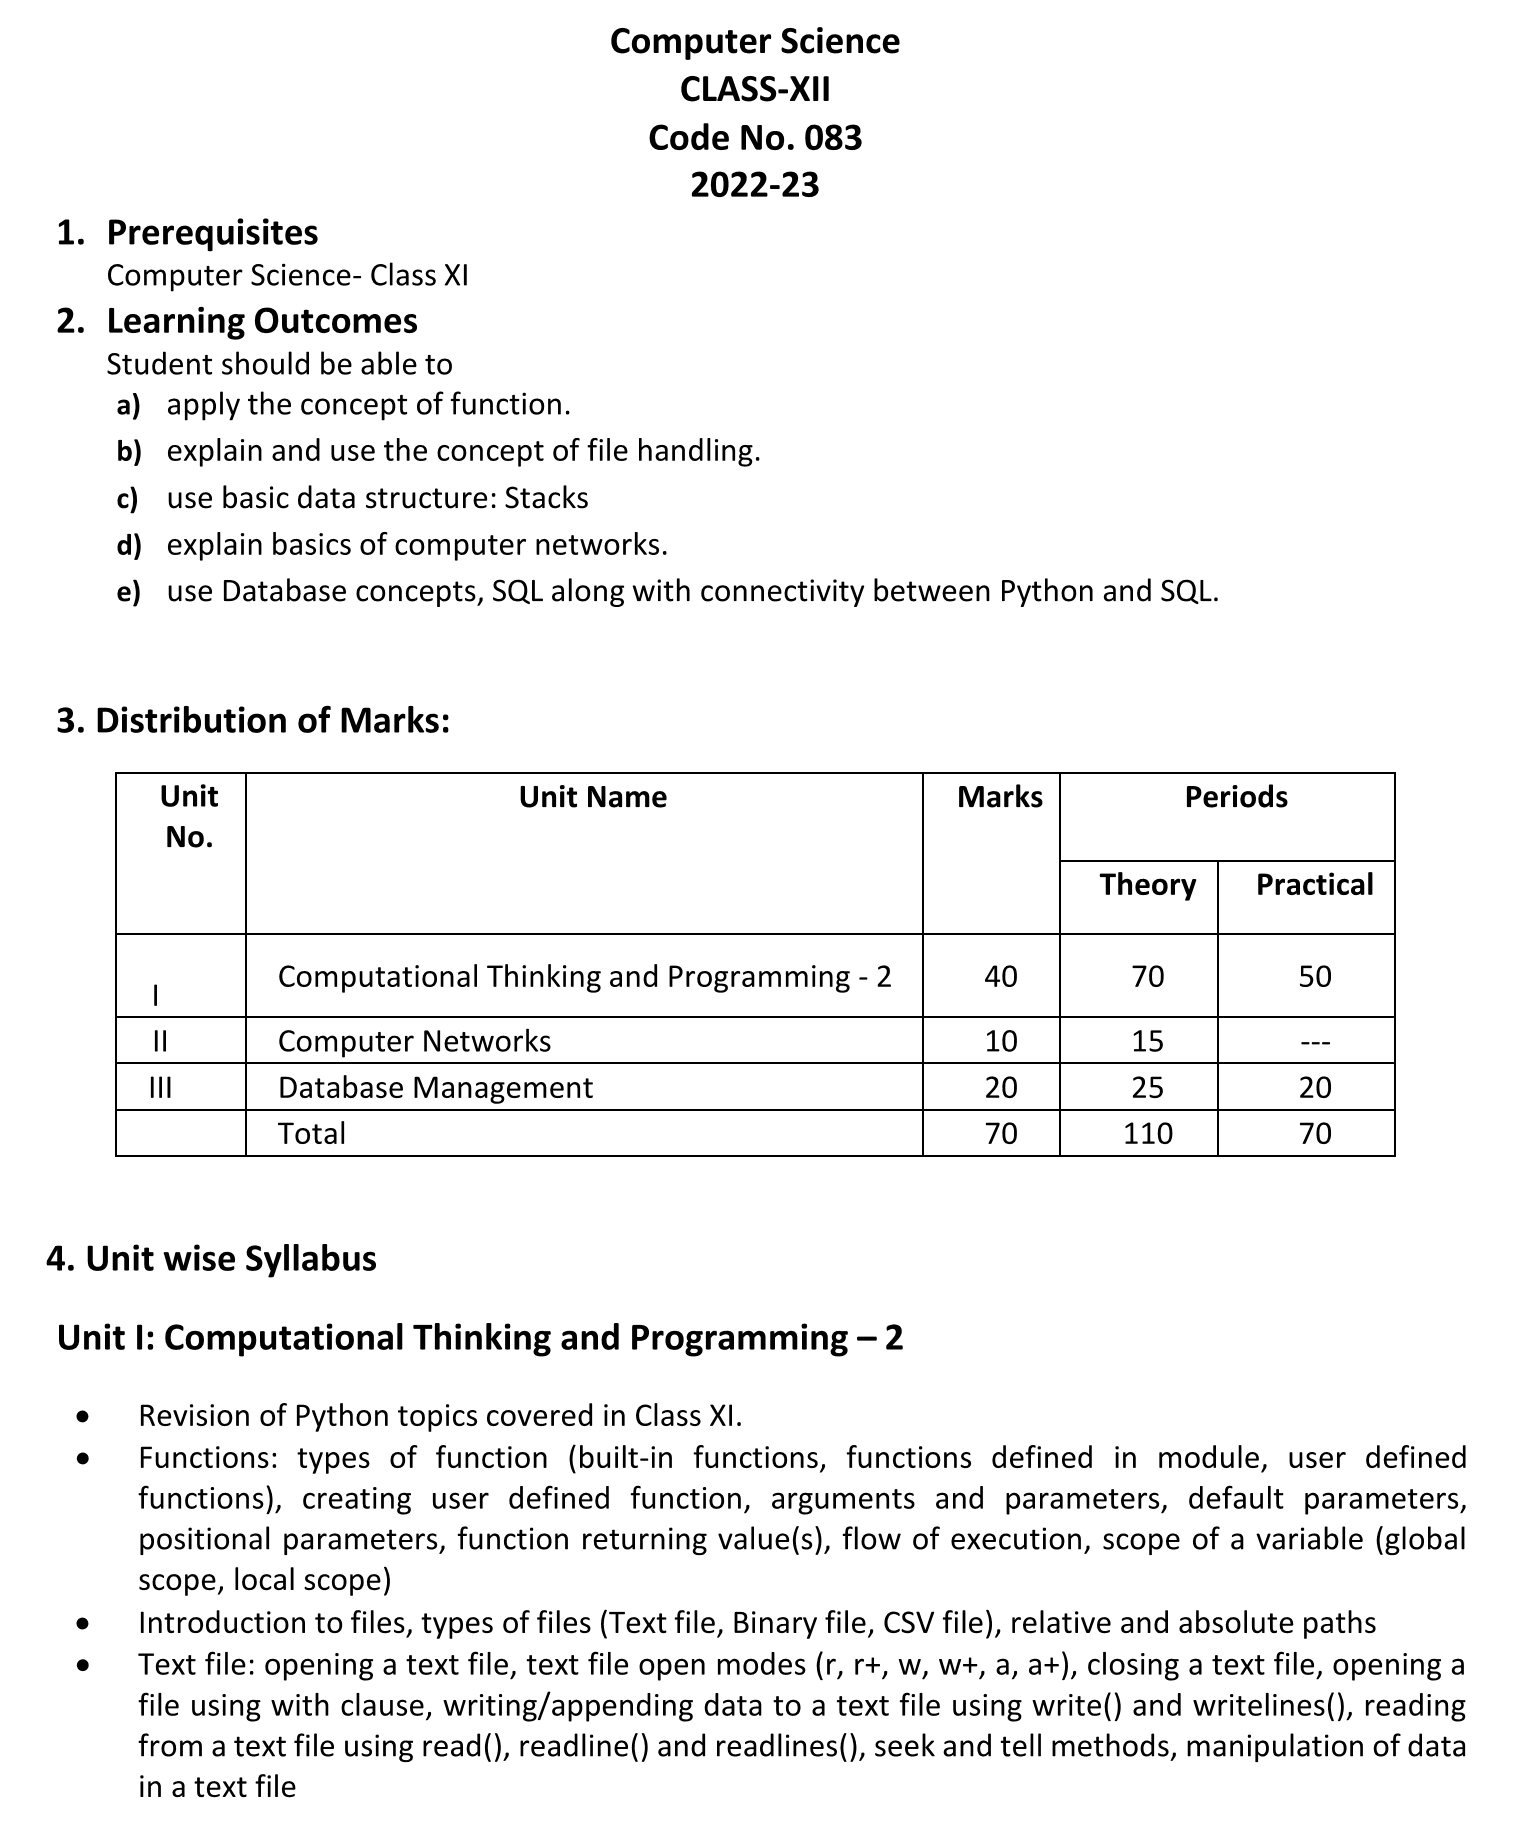 CBSE Class 12 Computer Science Syllabus 2022-23